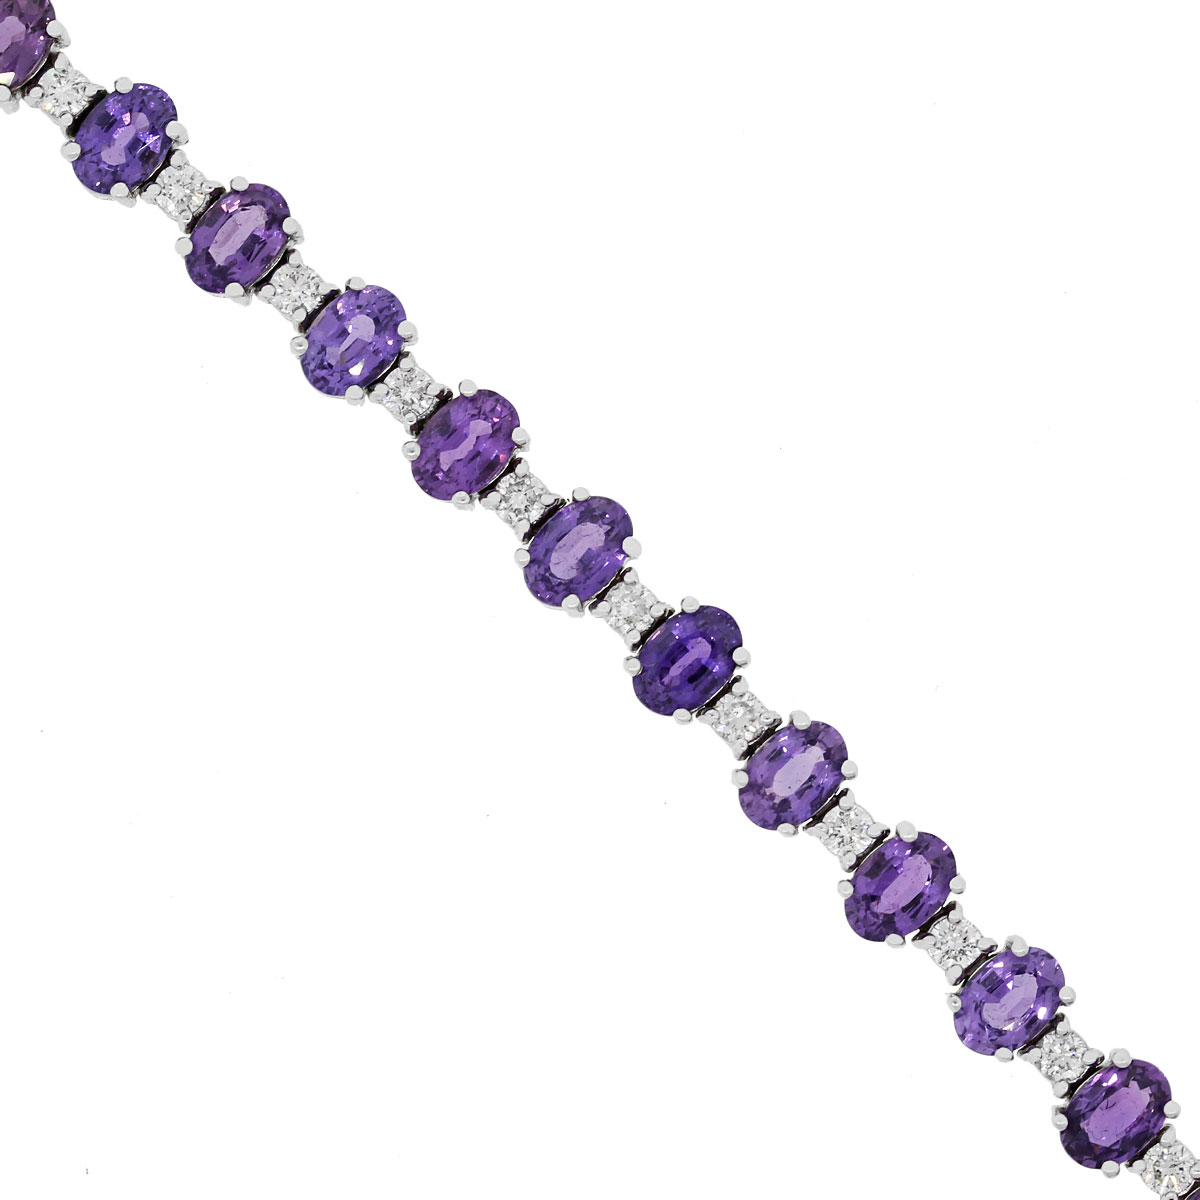 Buy Purple Bracelets at Best Price in India | Myntra